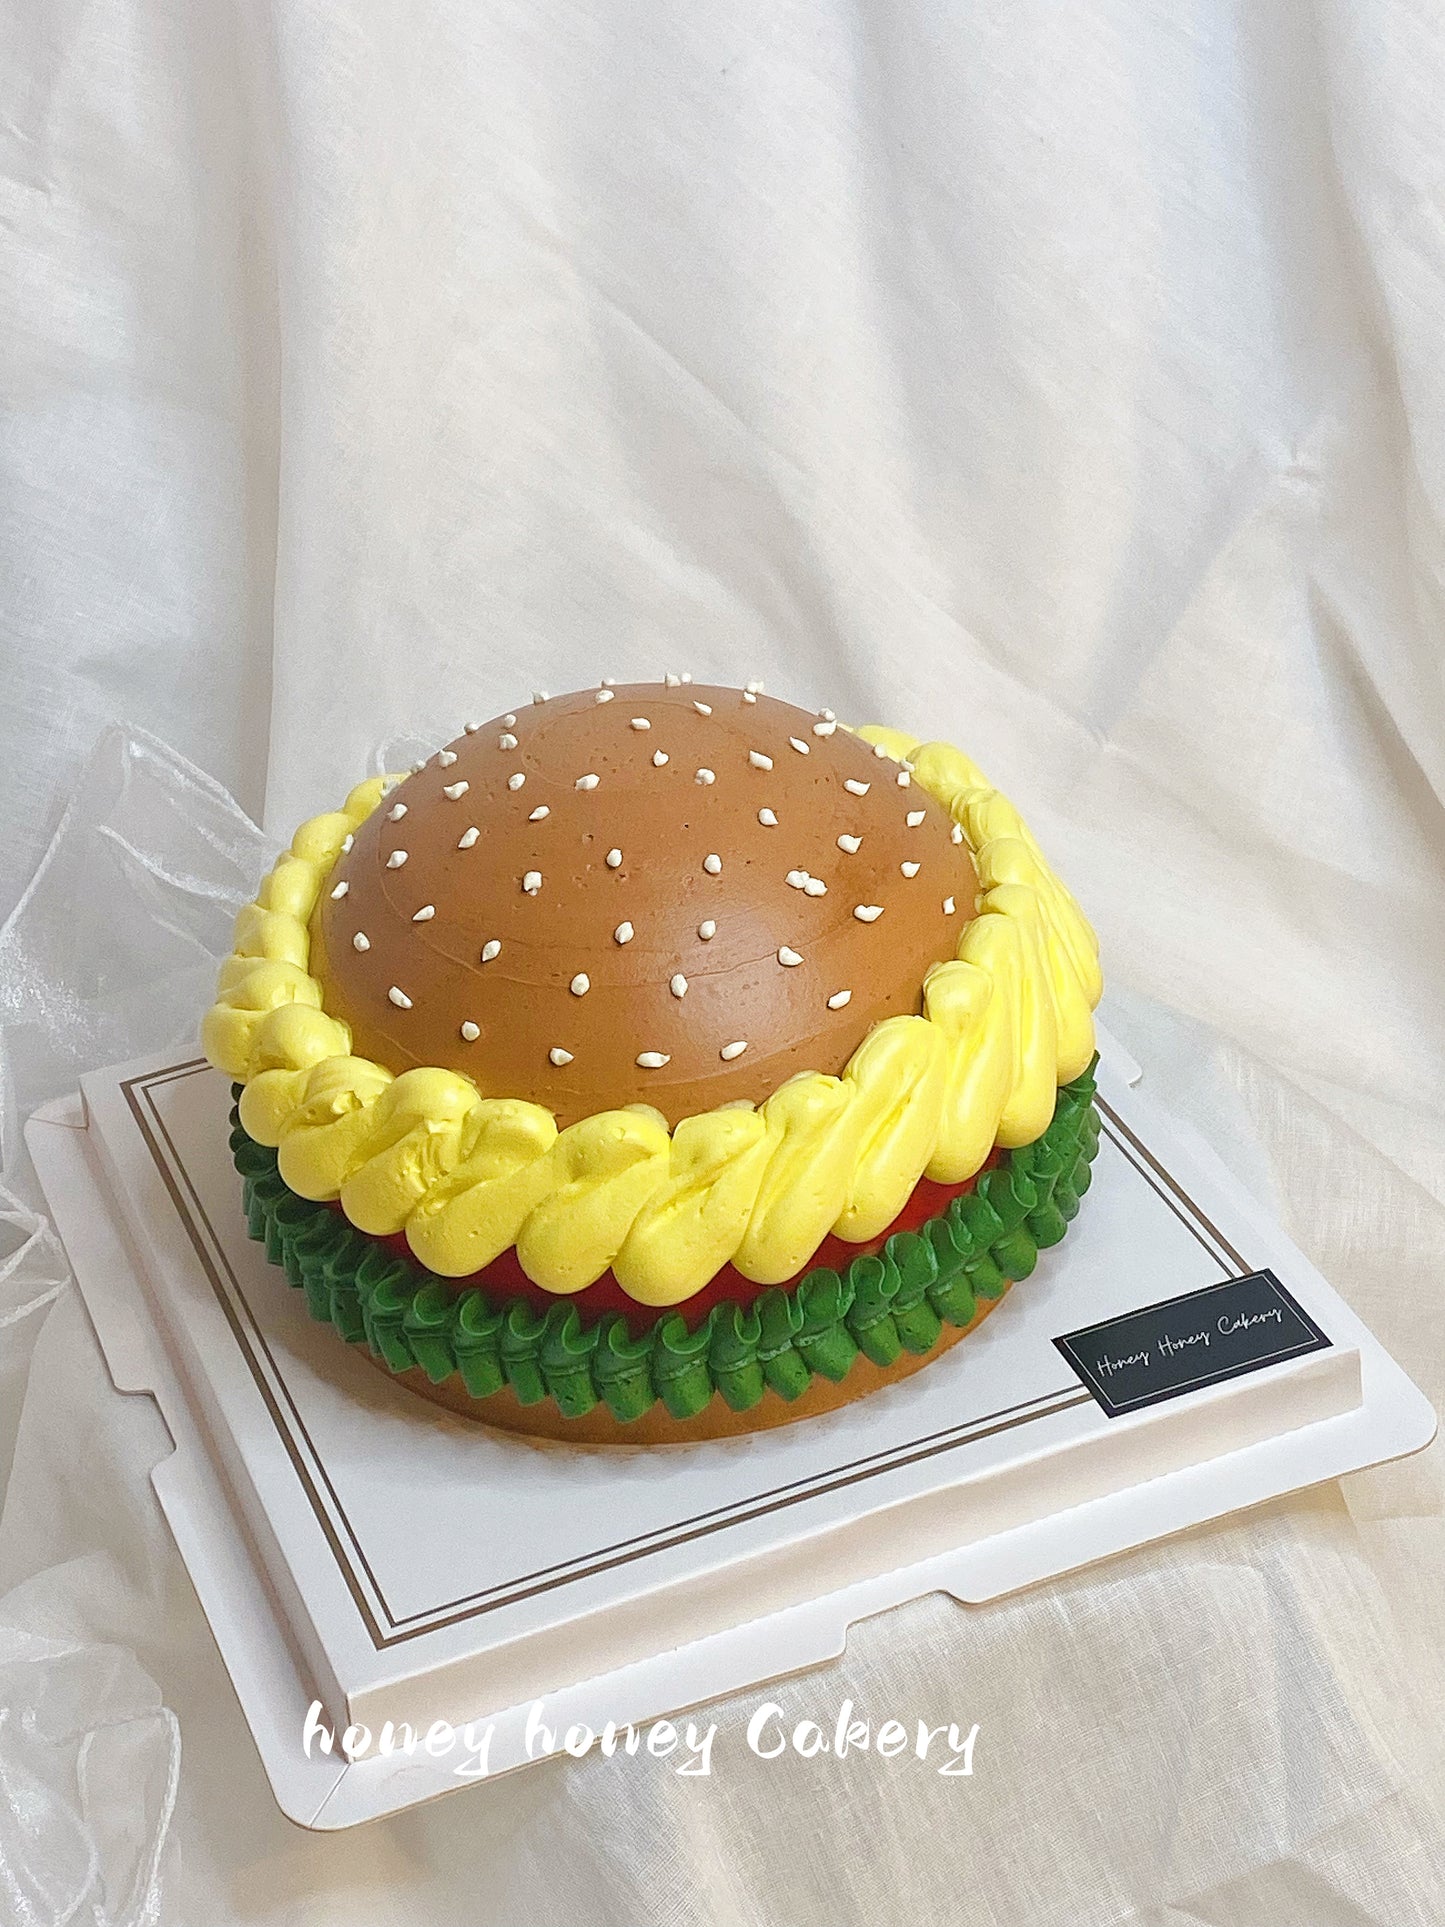 Design---Hamburg Chiffon Cake